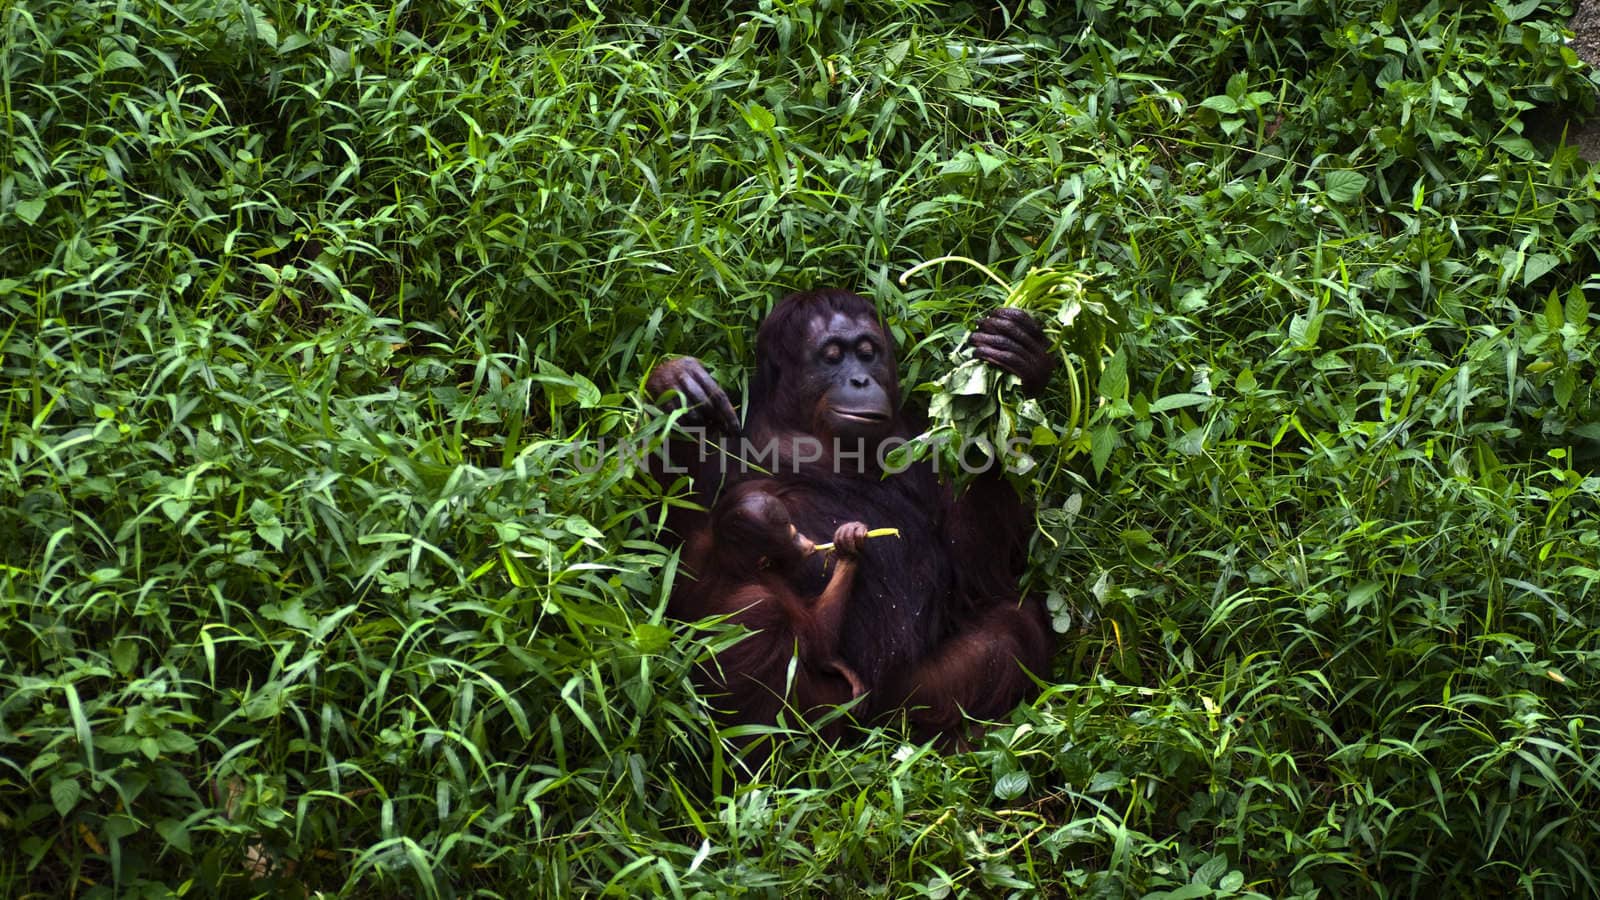 An orangutan mother and baby feeding in high grass